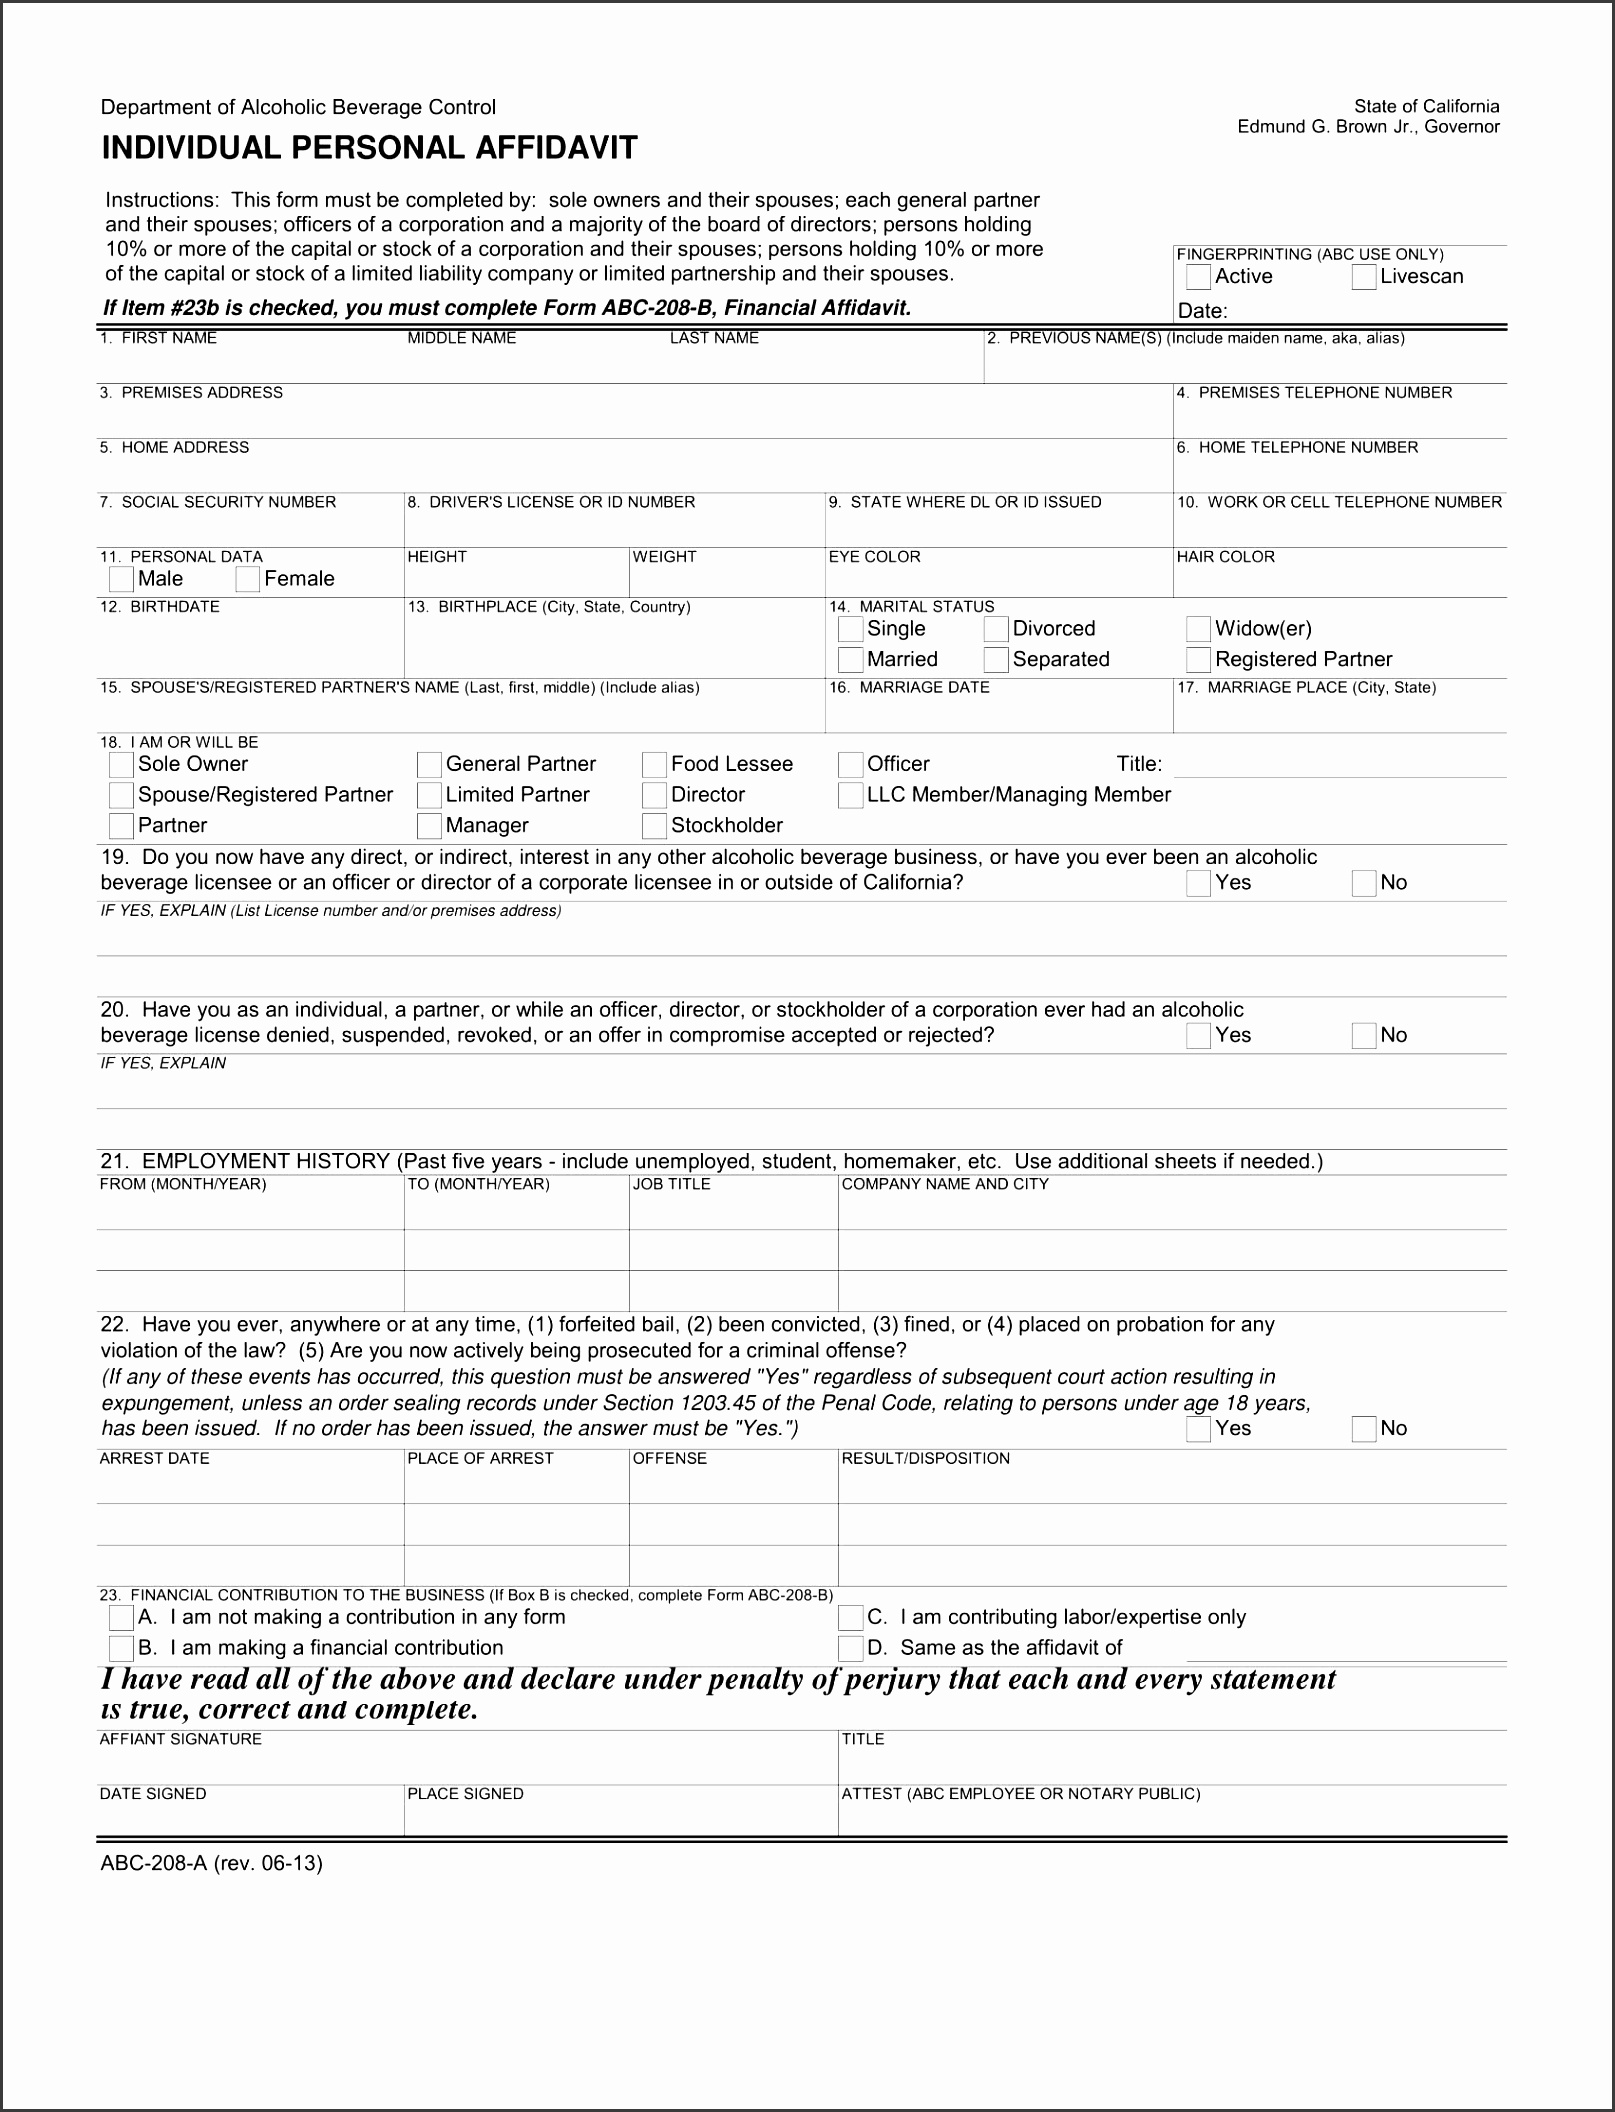 individual personal affidavit form sample